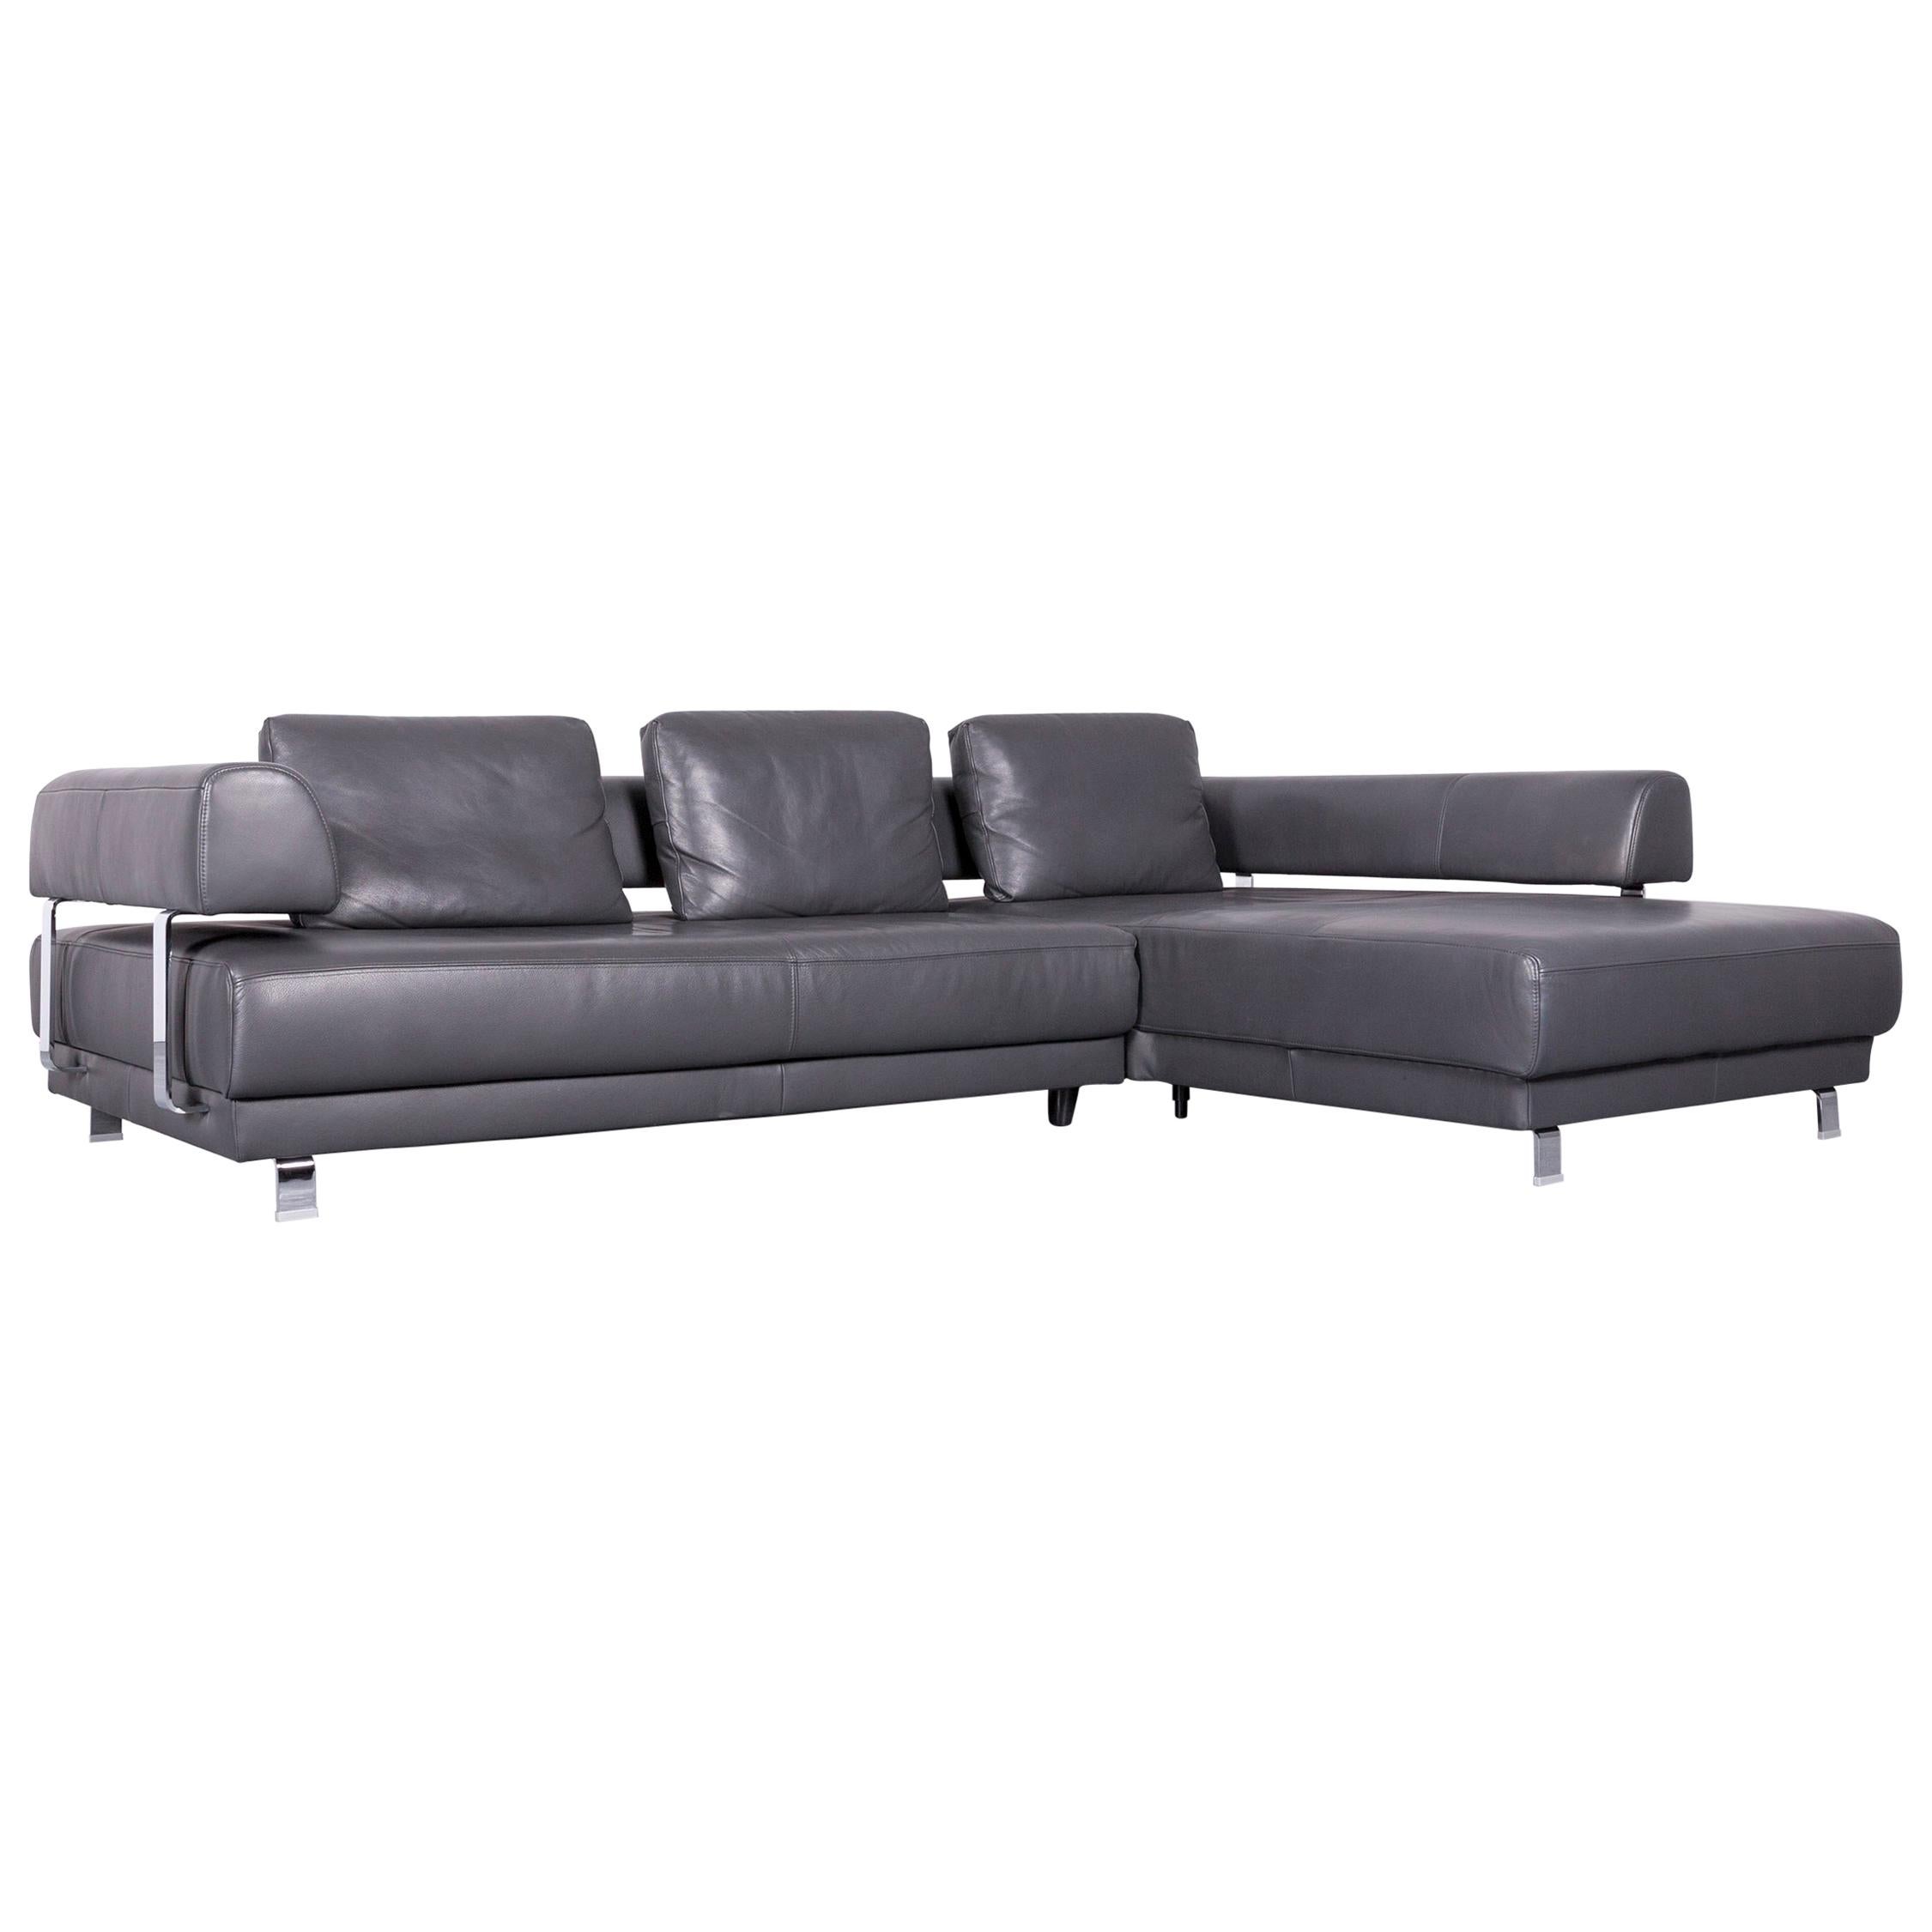 Ewald Schillig Brand Face Designer Sofa Leather Grey Corner Couch For Sale